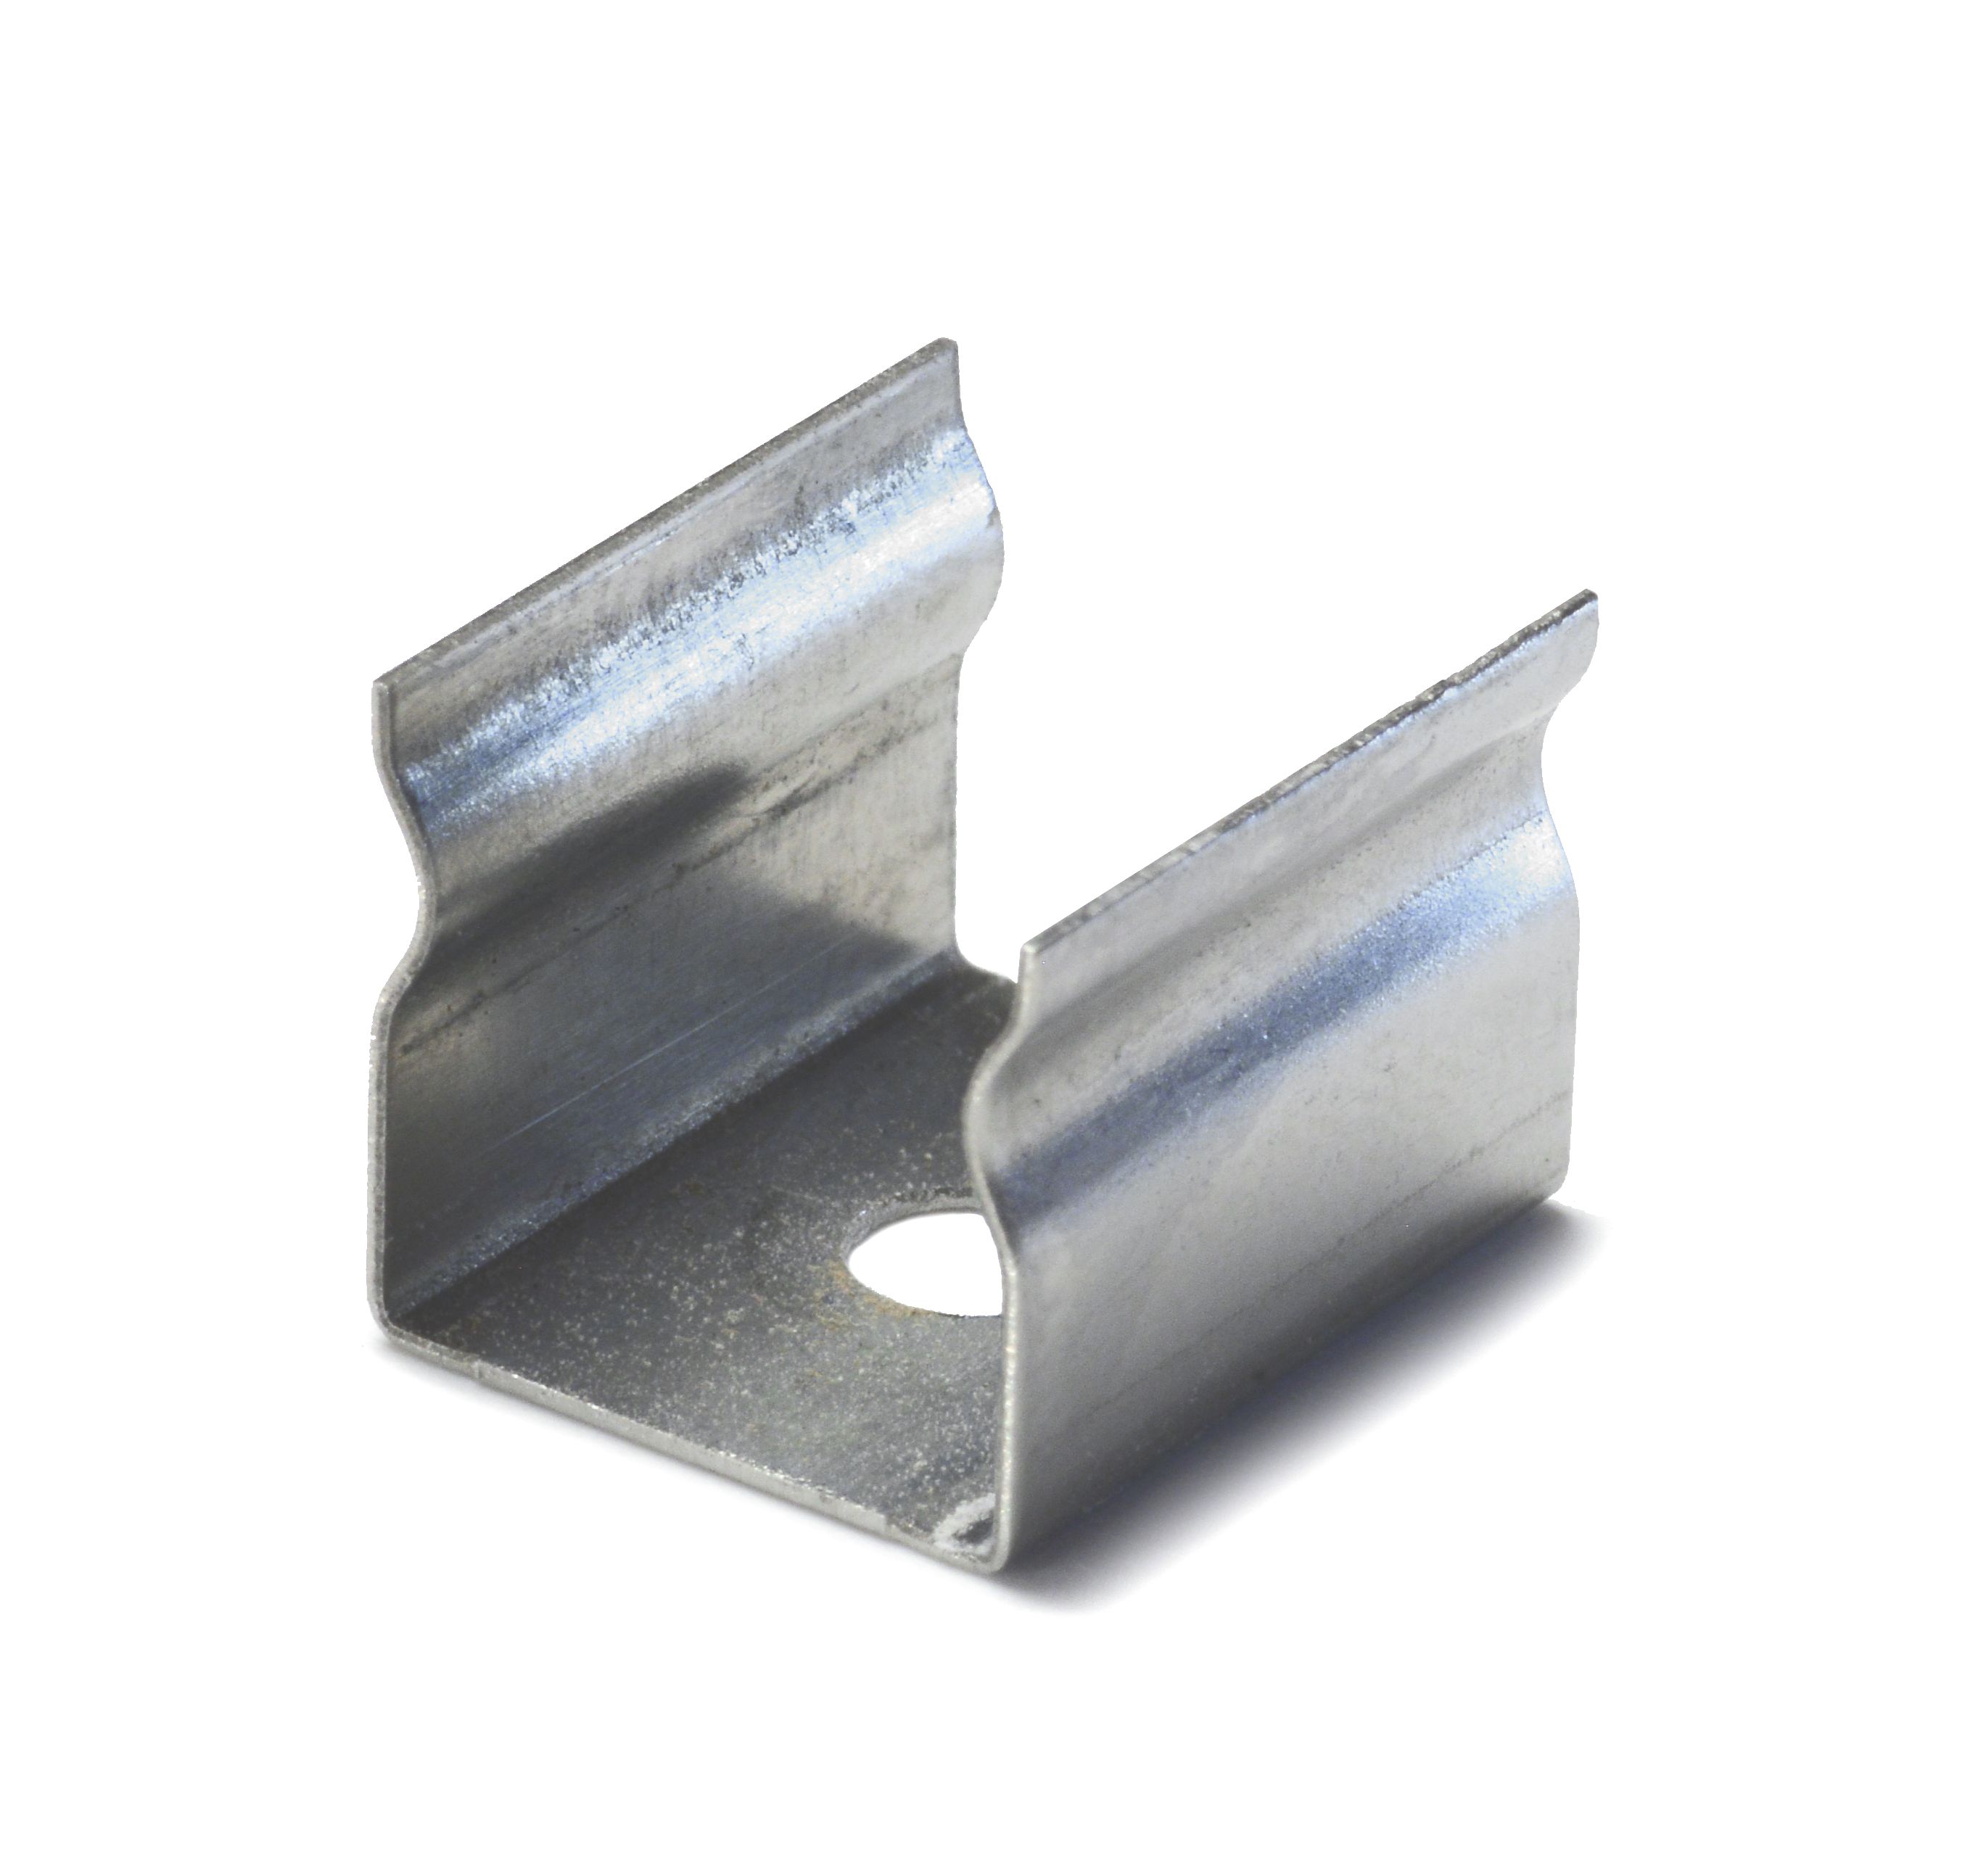 QolorFLEX NuNeon Aluminum Extrusion Mounting Clip, Pack of 10